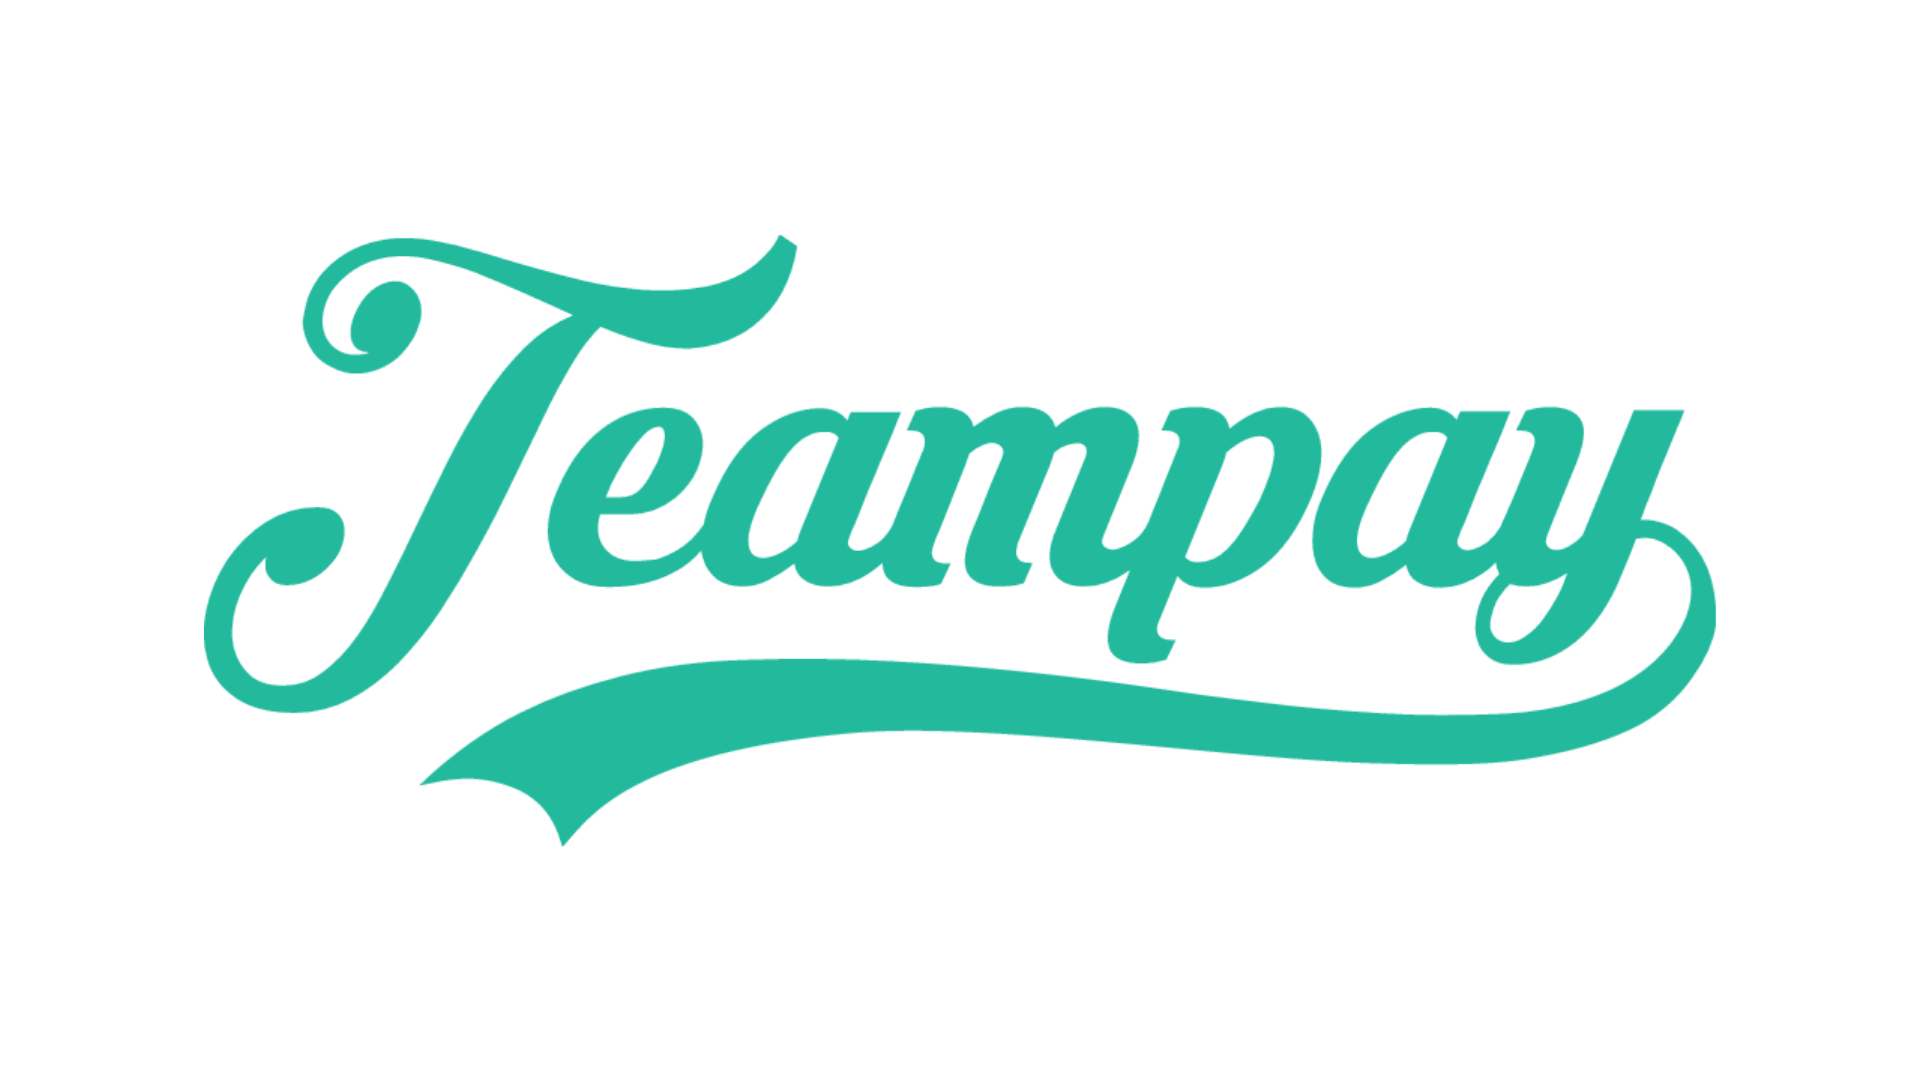 Teampay logo